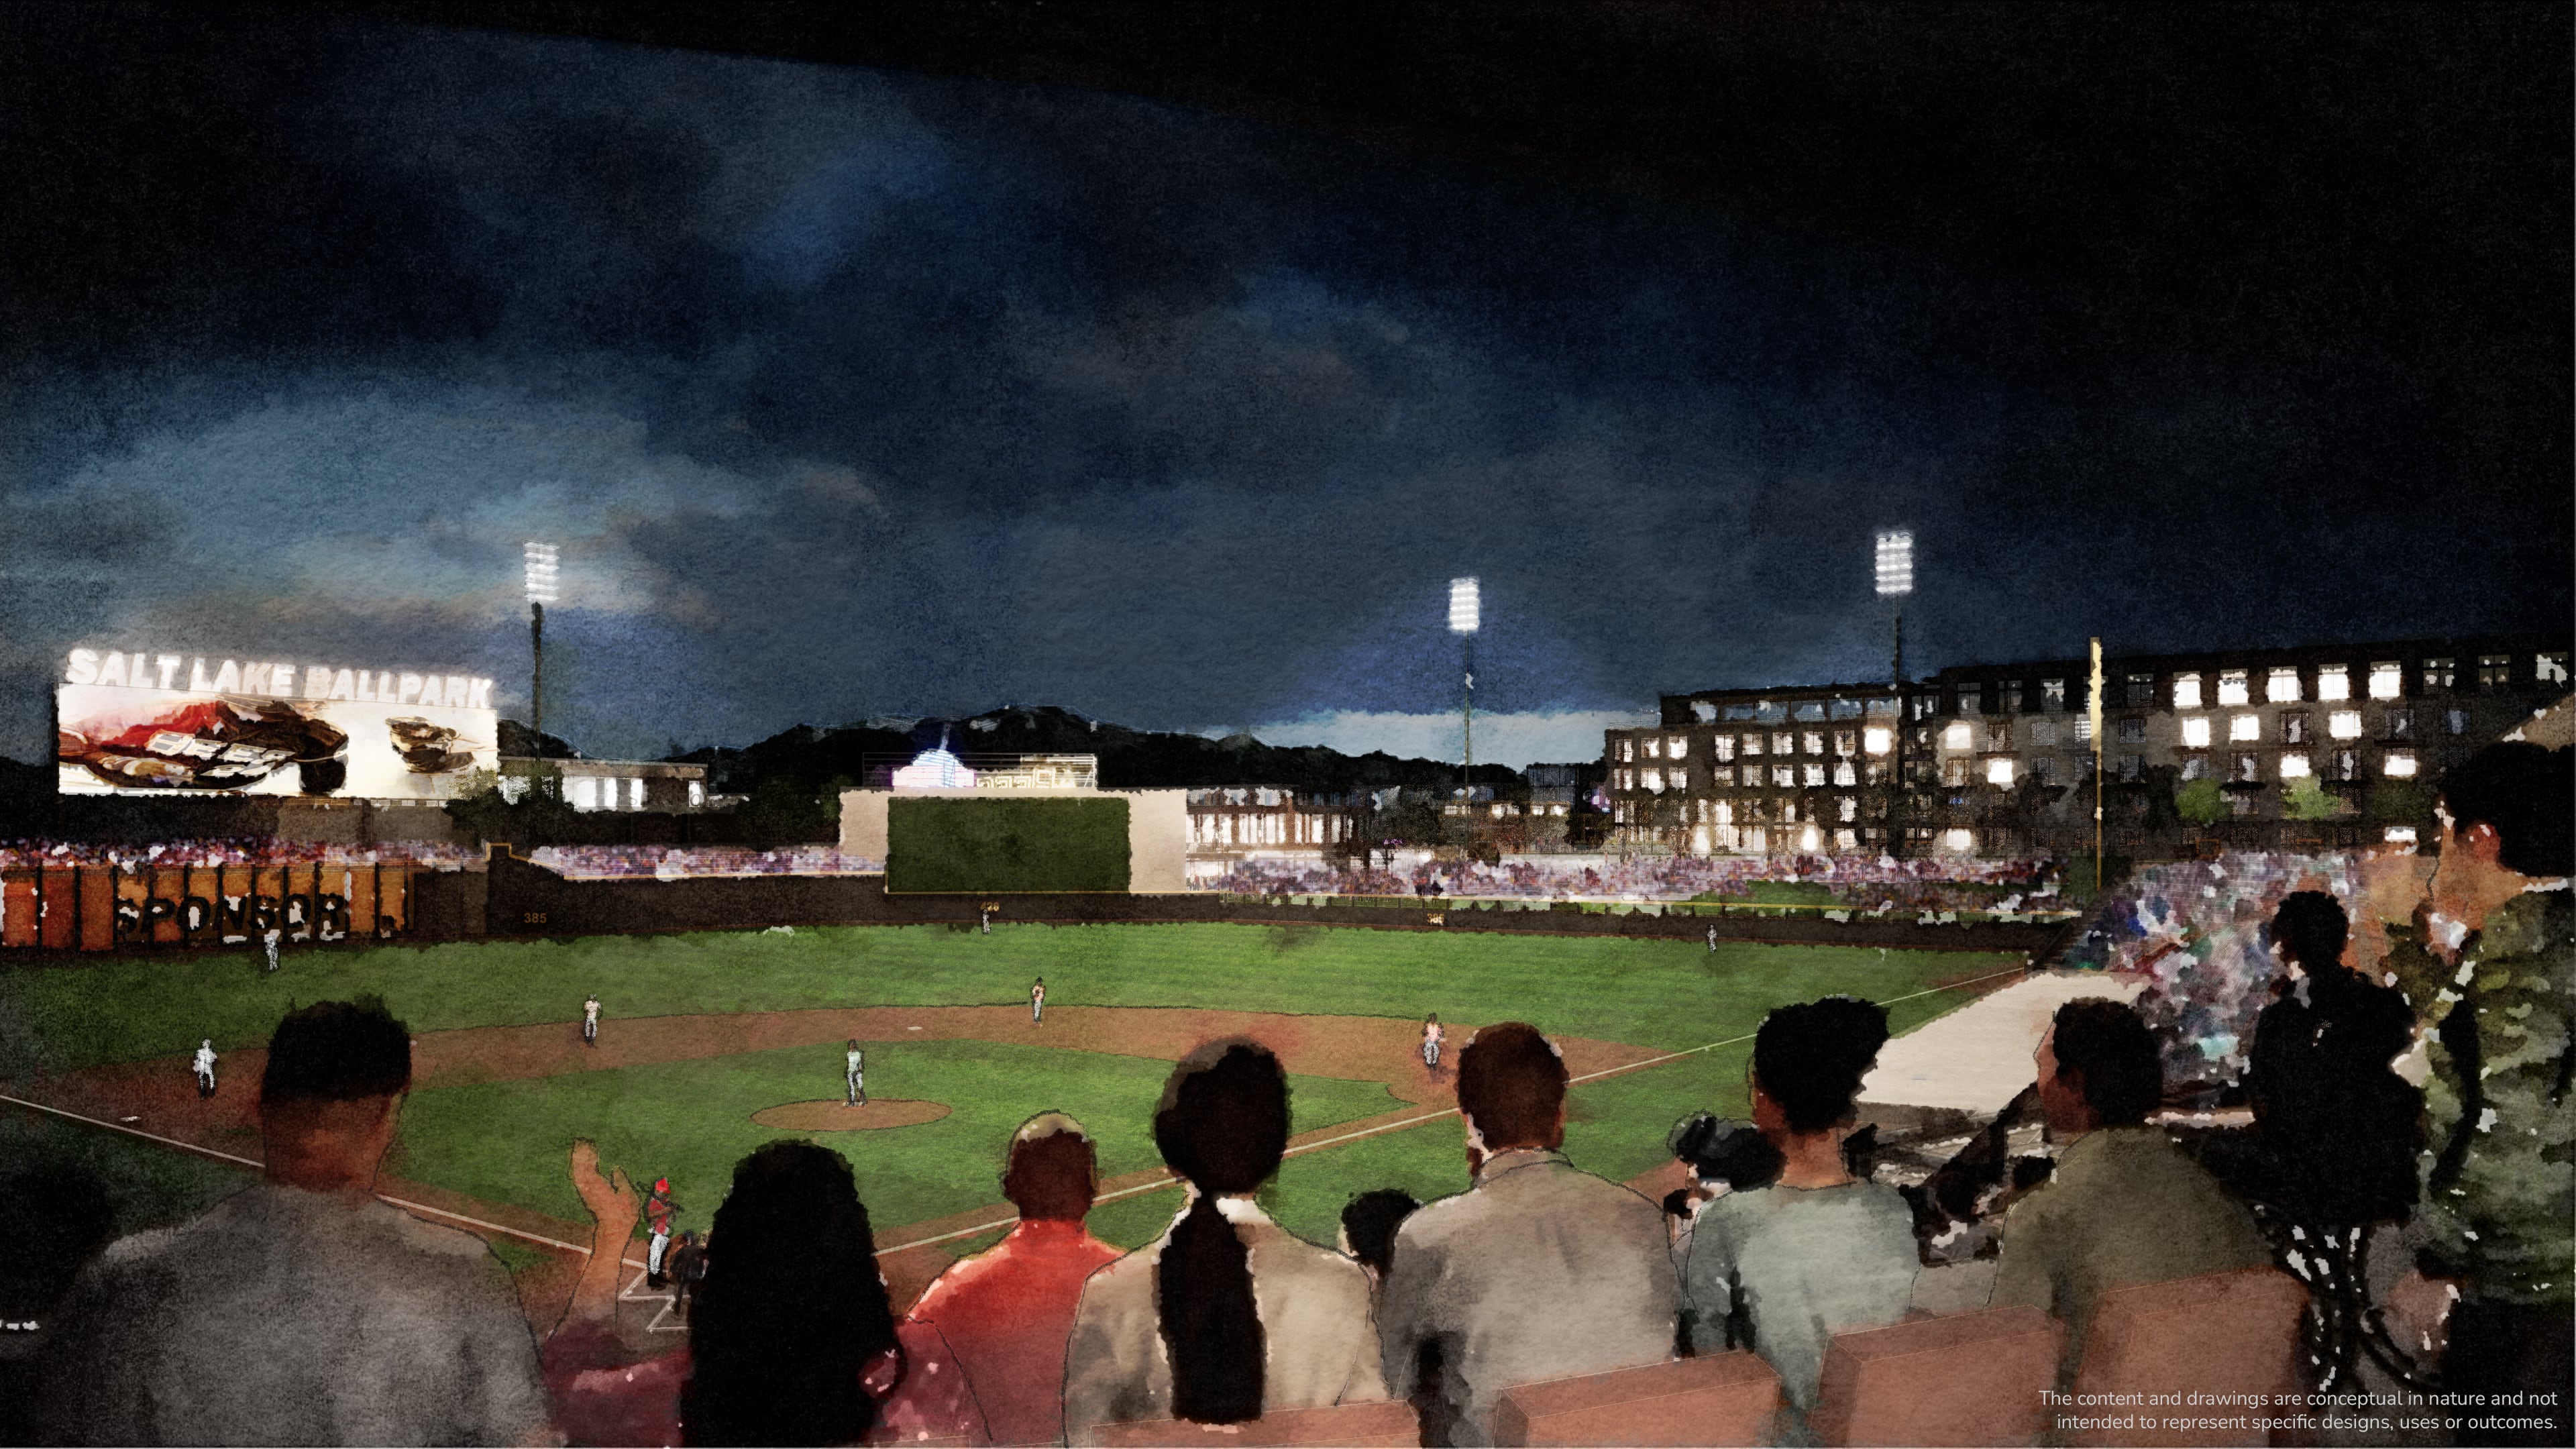 Photos: Renderings of MLB Ballpark In SLC Released